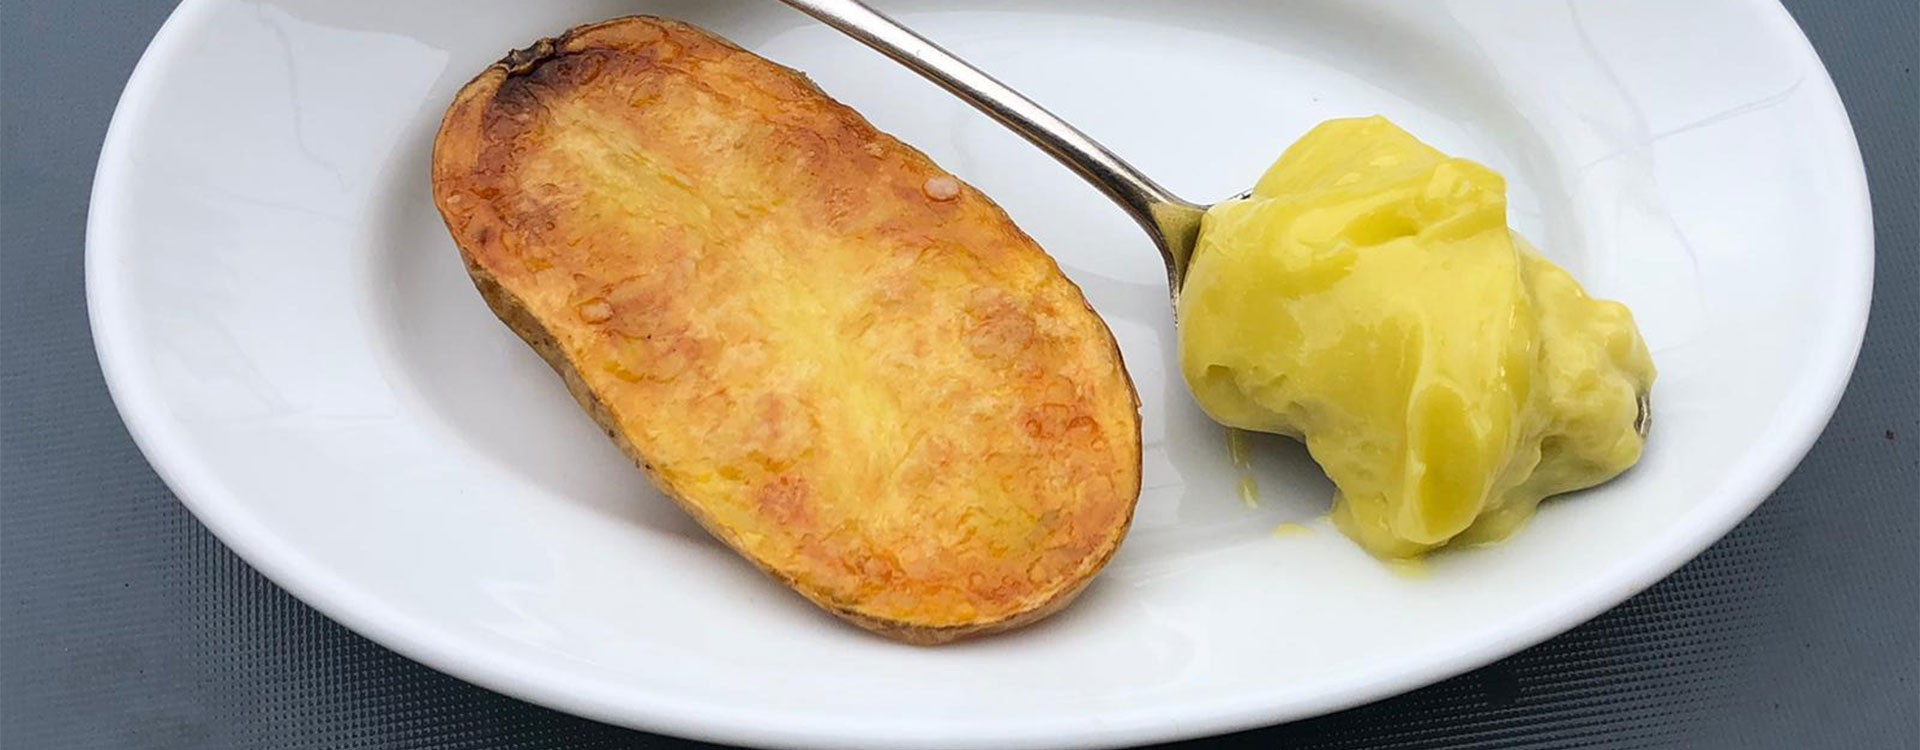 Patatas boca abajo - Pommes de terre face contre terre